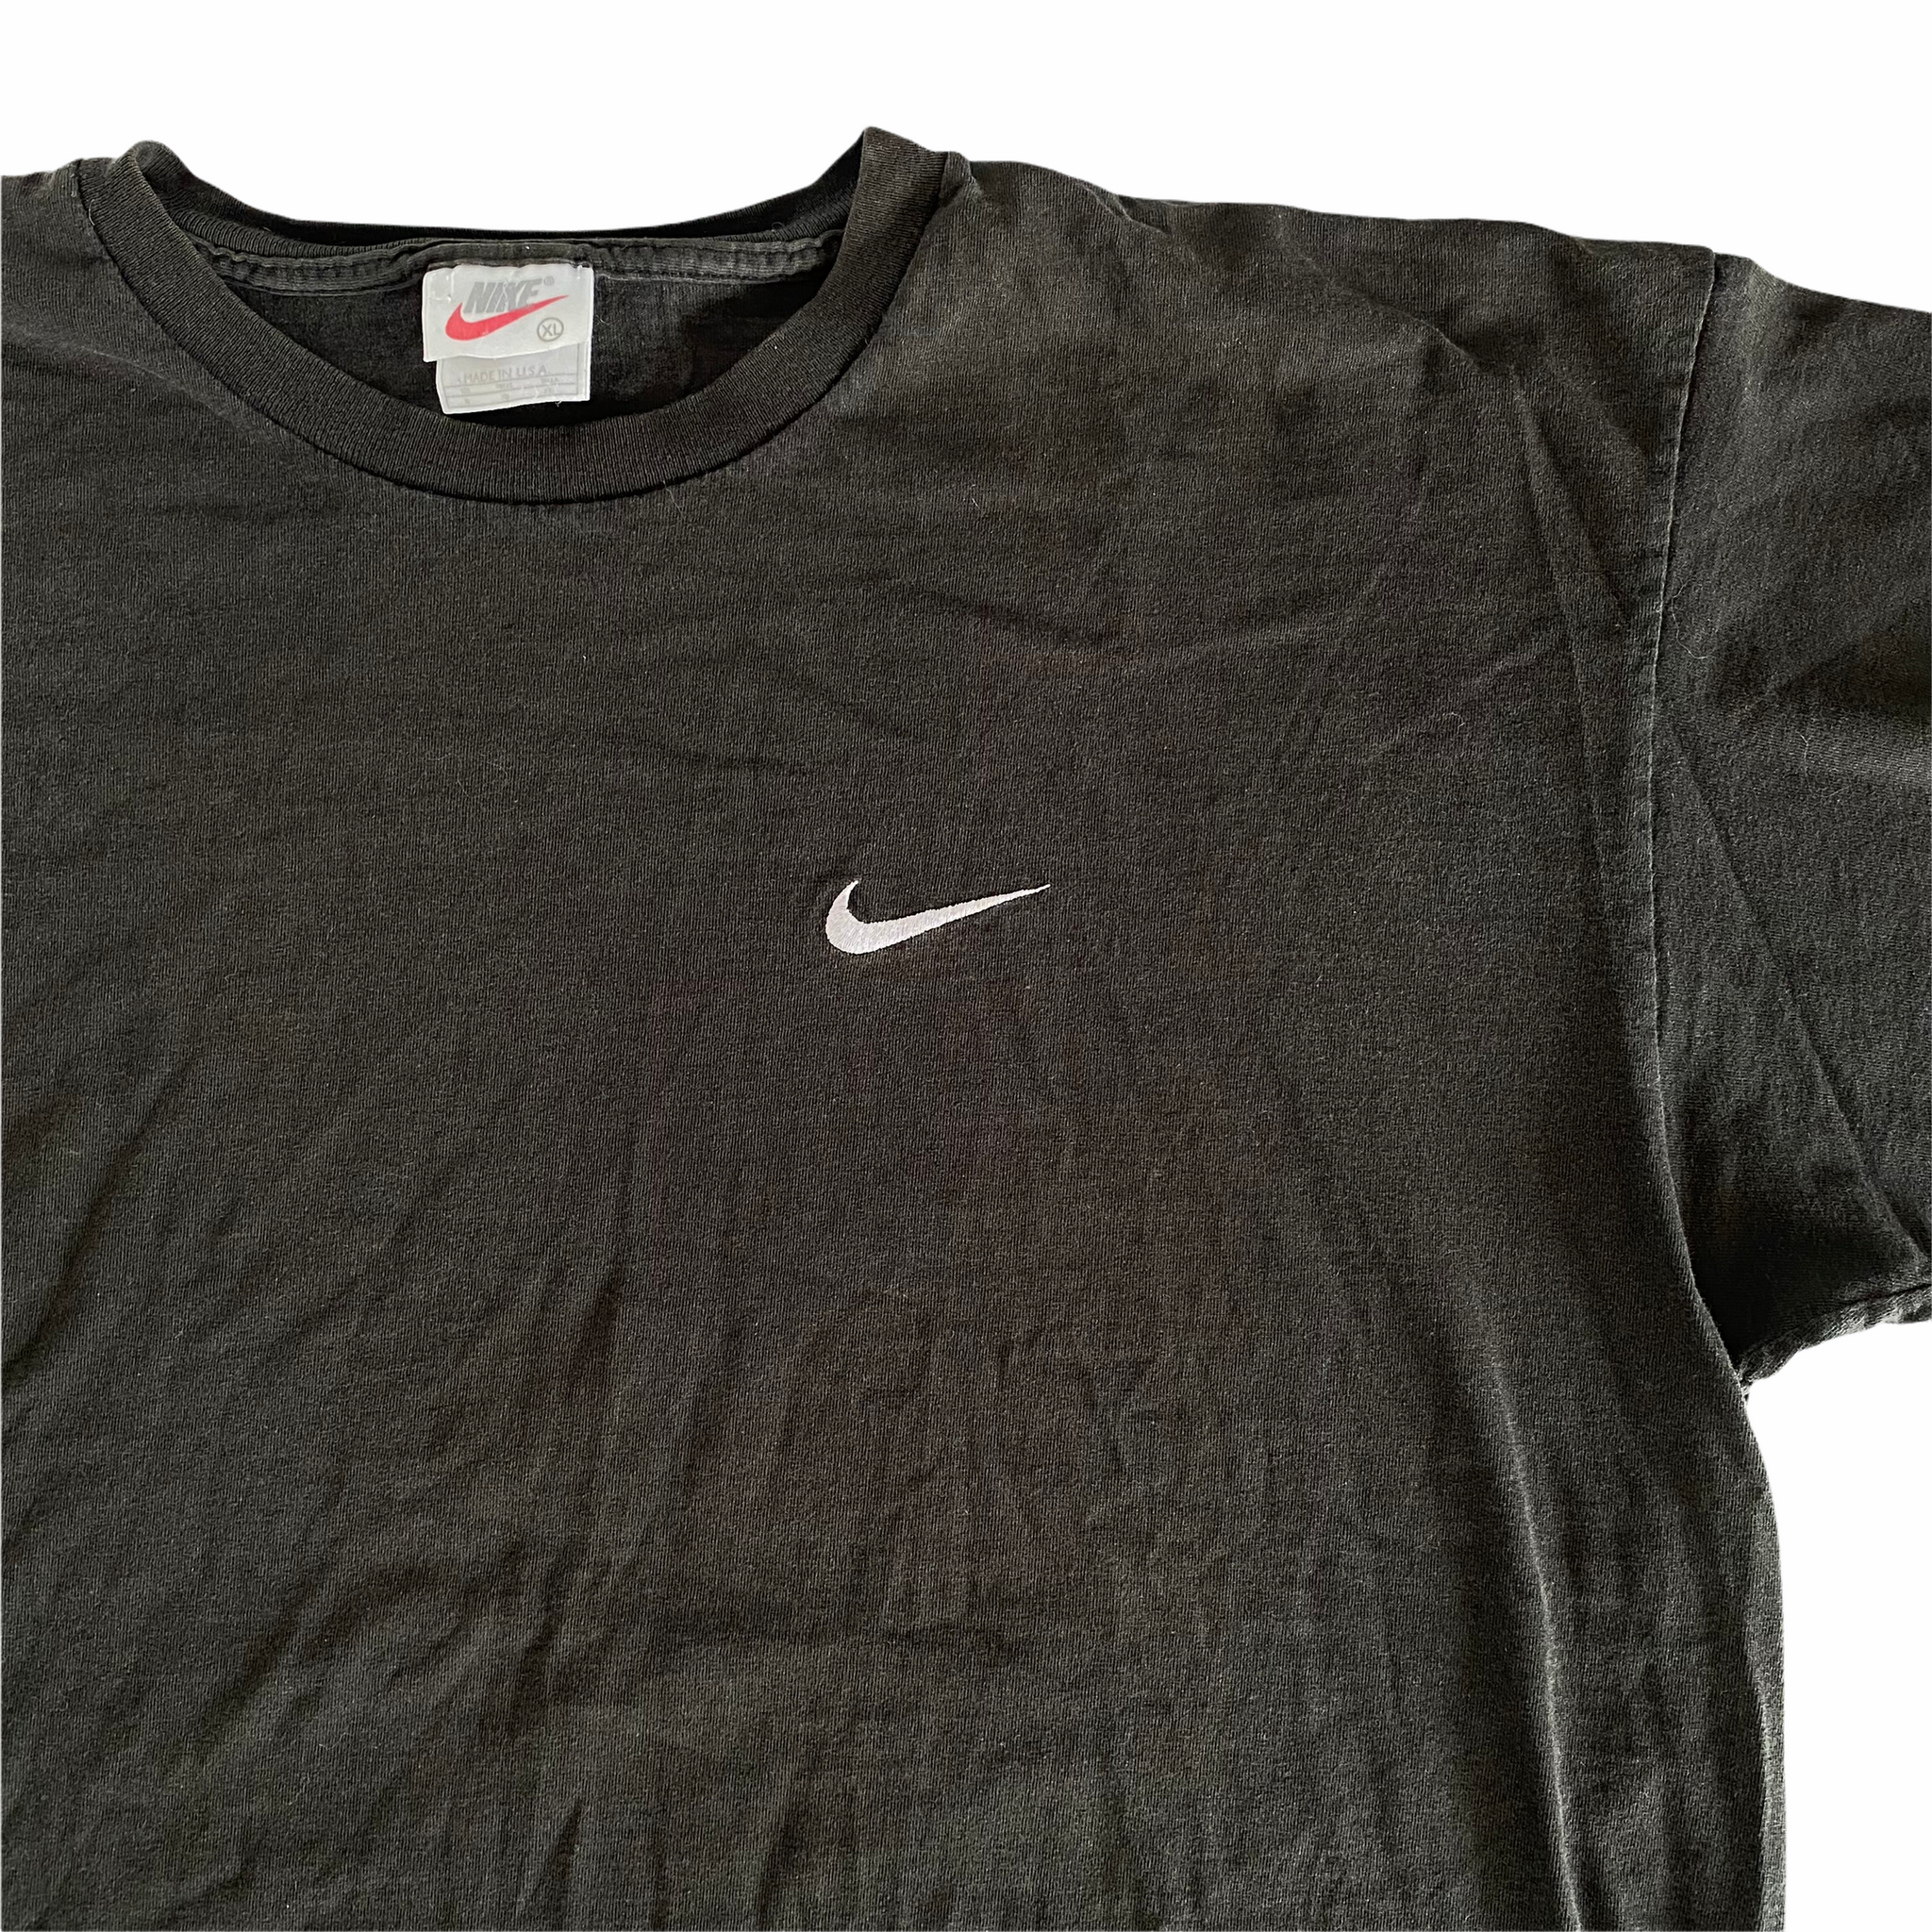 90s Nike tiny swoosh tee XL